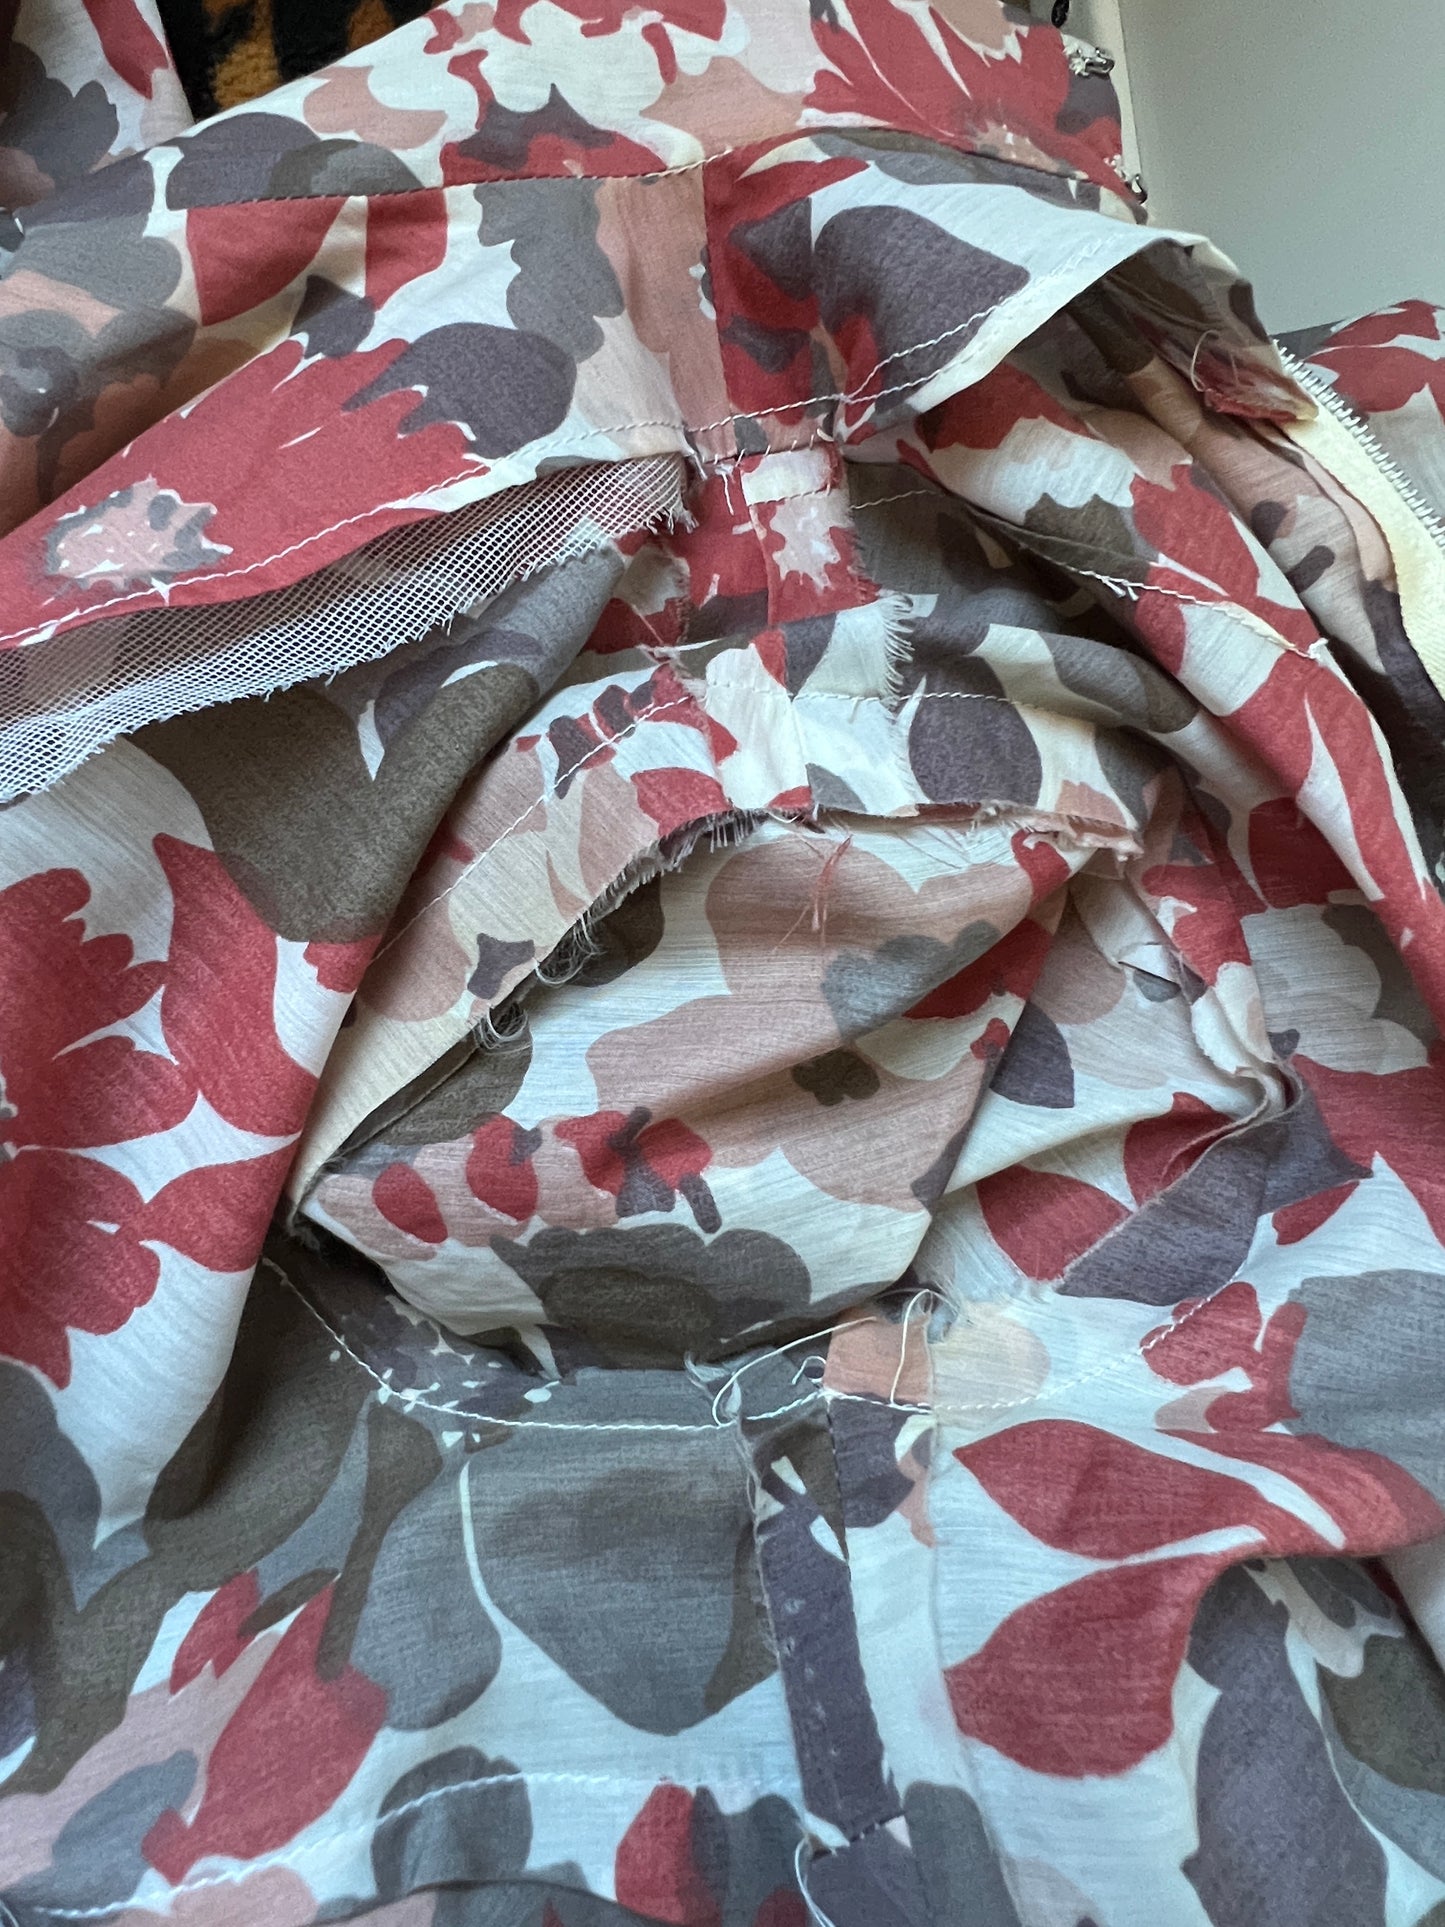 Vintage 1970s floral prairie maxi dress long sleeves matching belt S/M